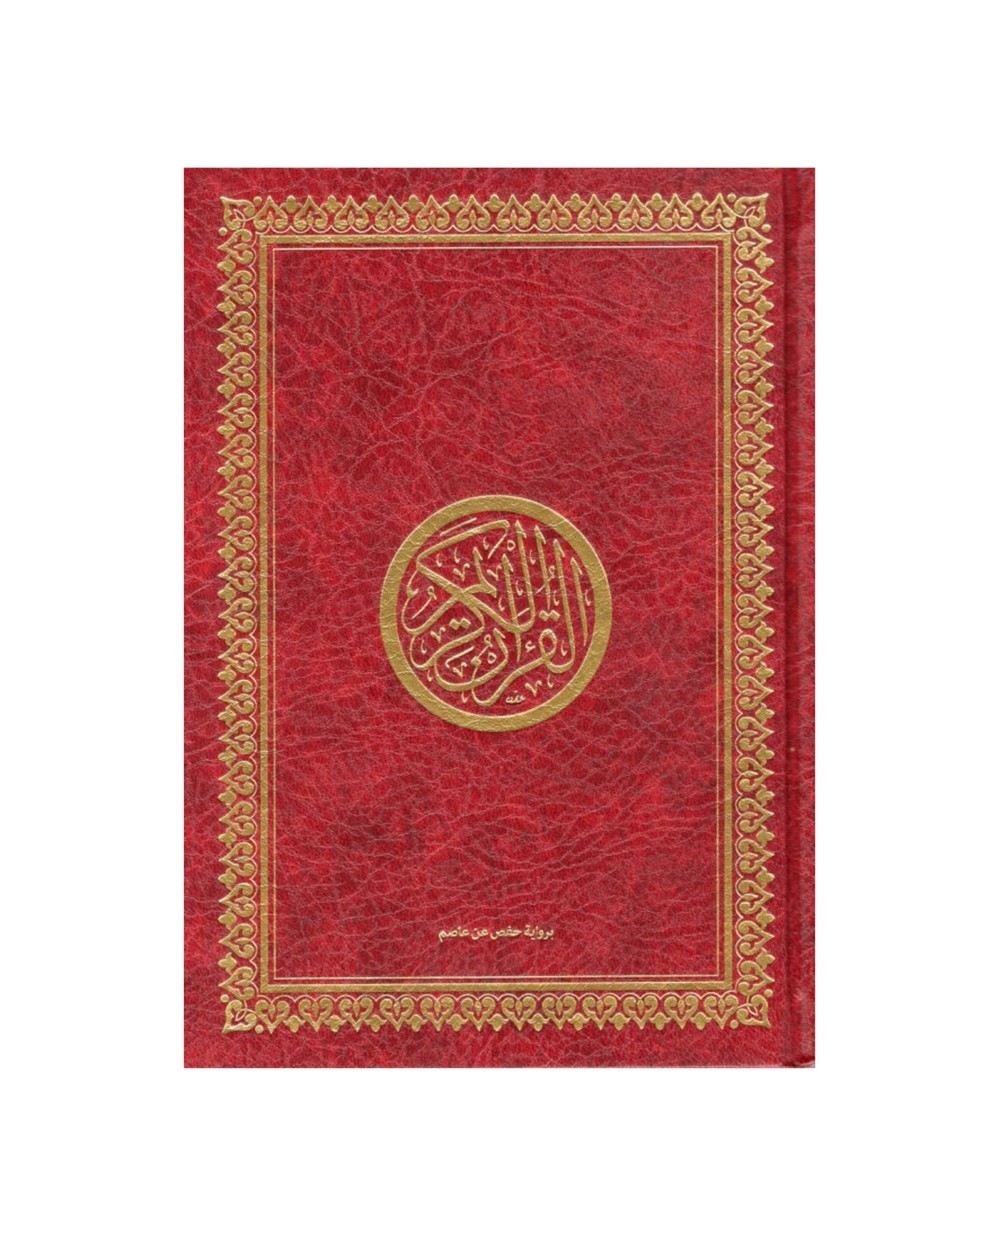 Arabic Quran large format 35 x 25 cm